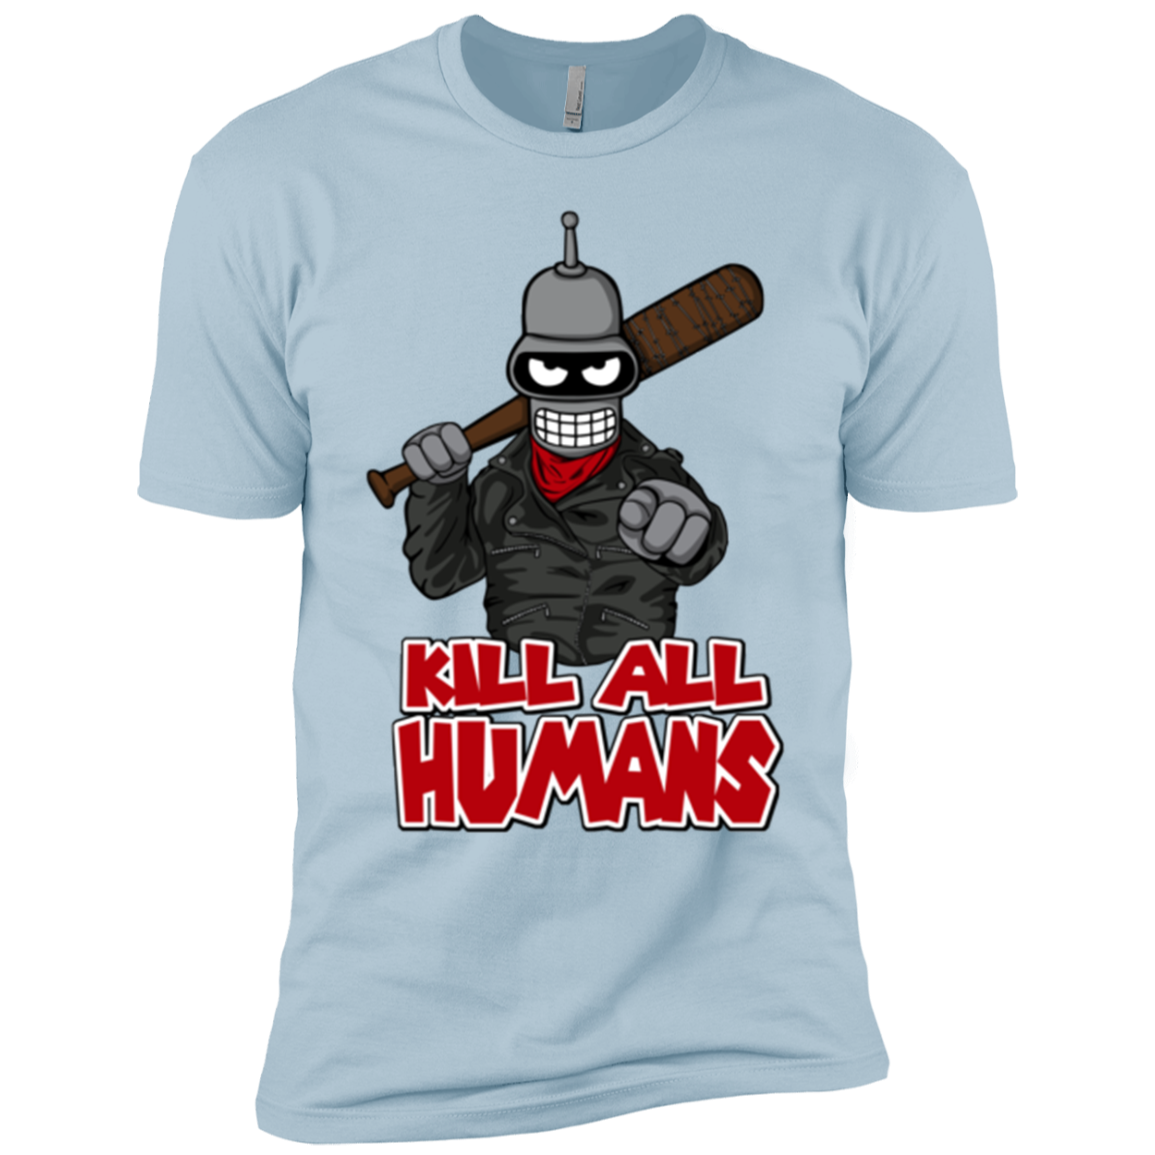 The Walking Bot Boys Premium T-Shirt